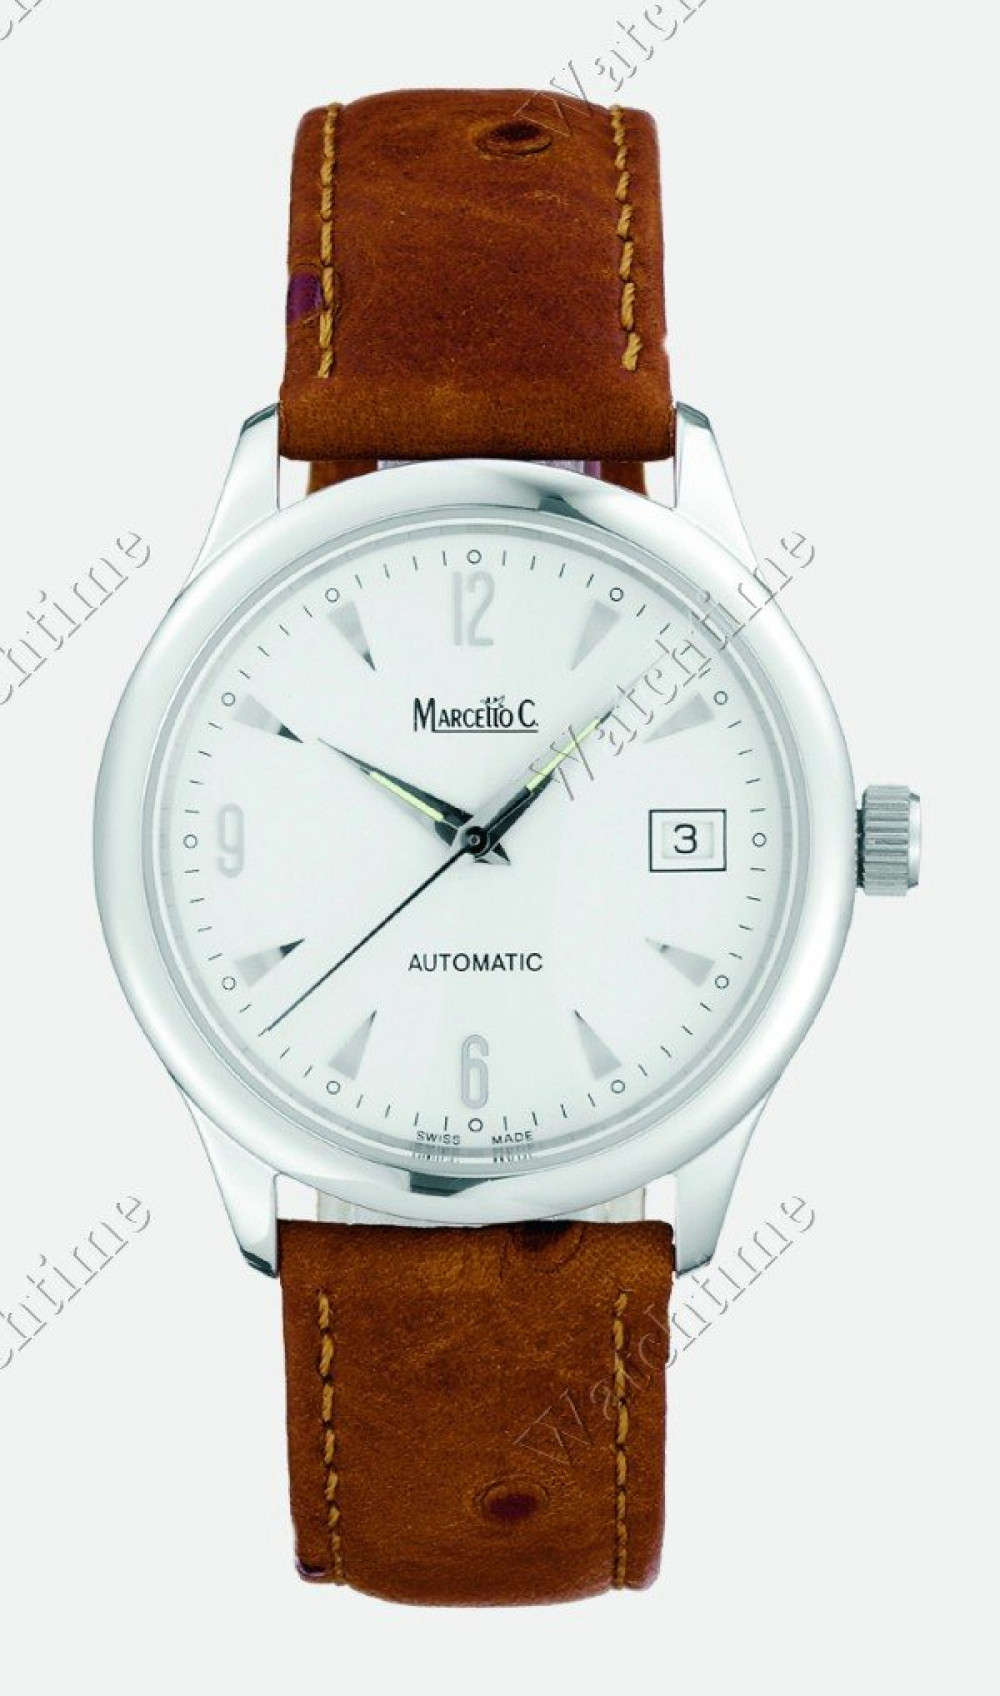 Zegarek firmy Marcello C., model Automatik